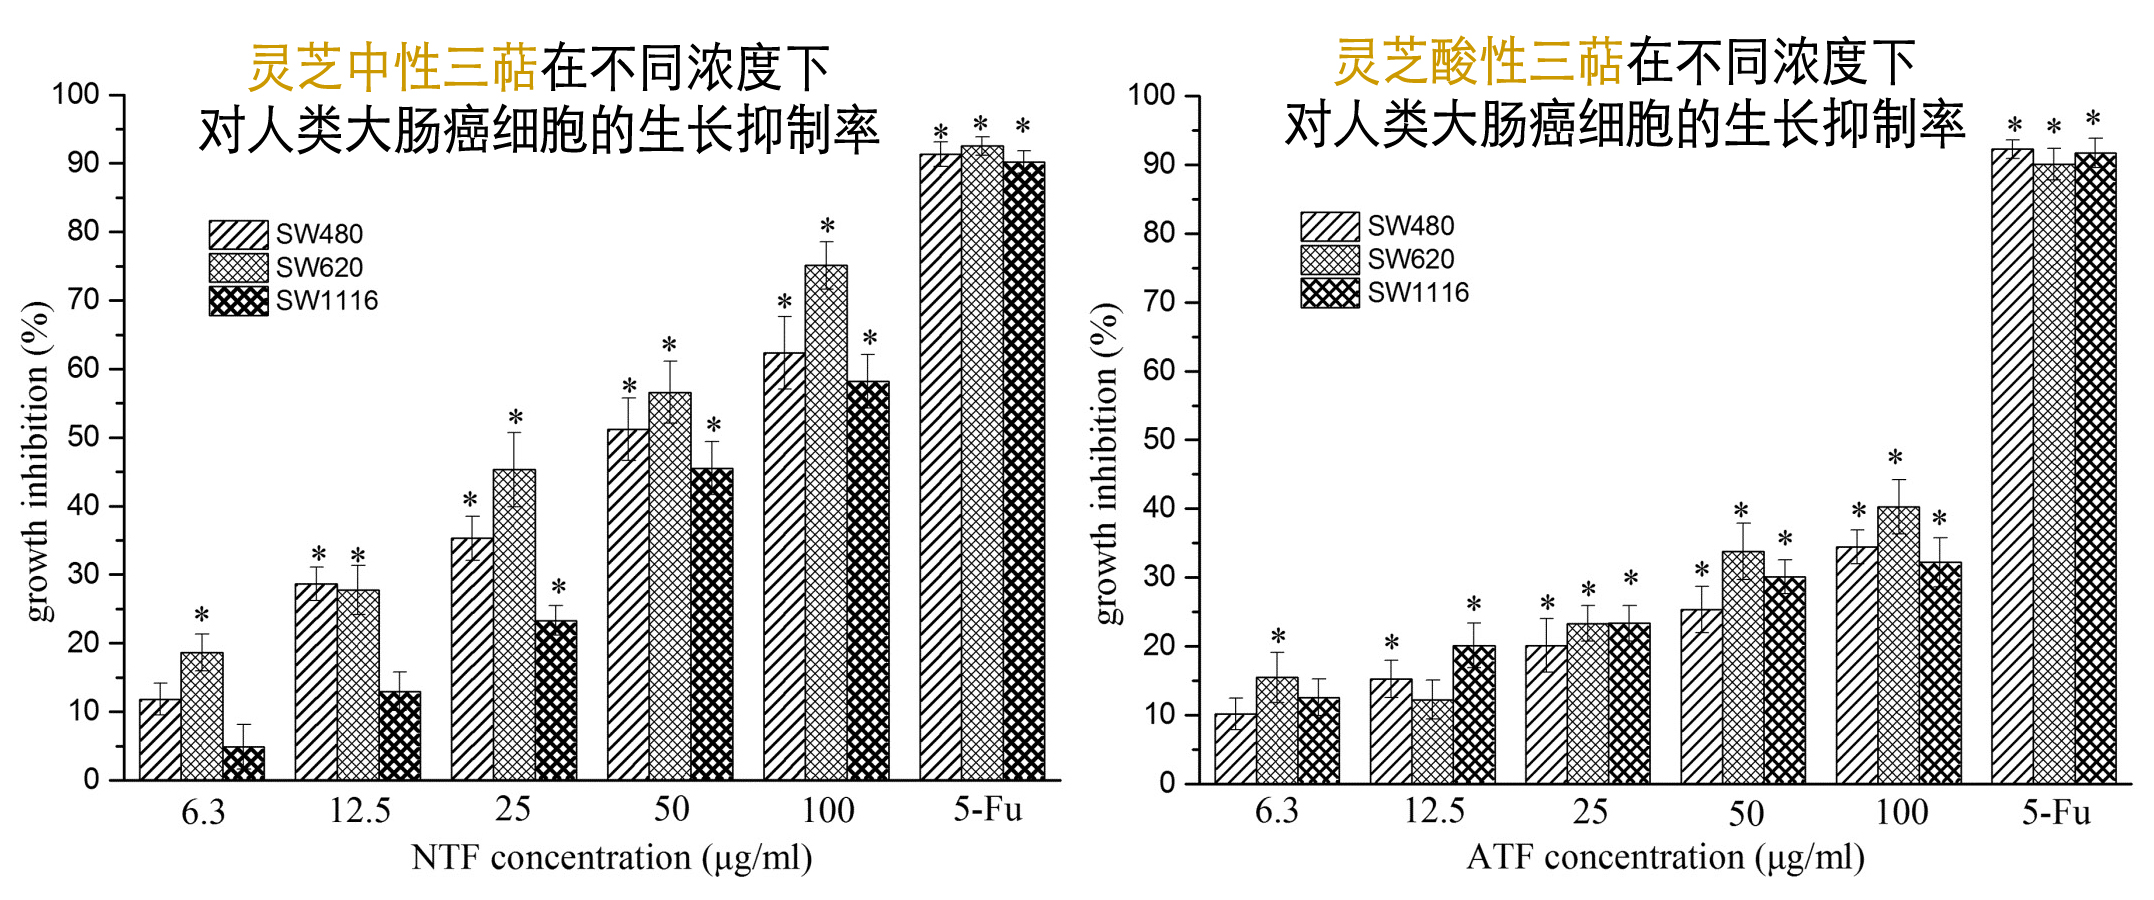 The anticancer effects of neutral triterpenes and acid triterpenes of ganoderma lucidum were compared